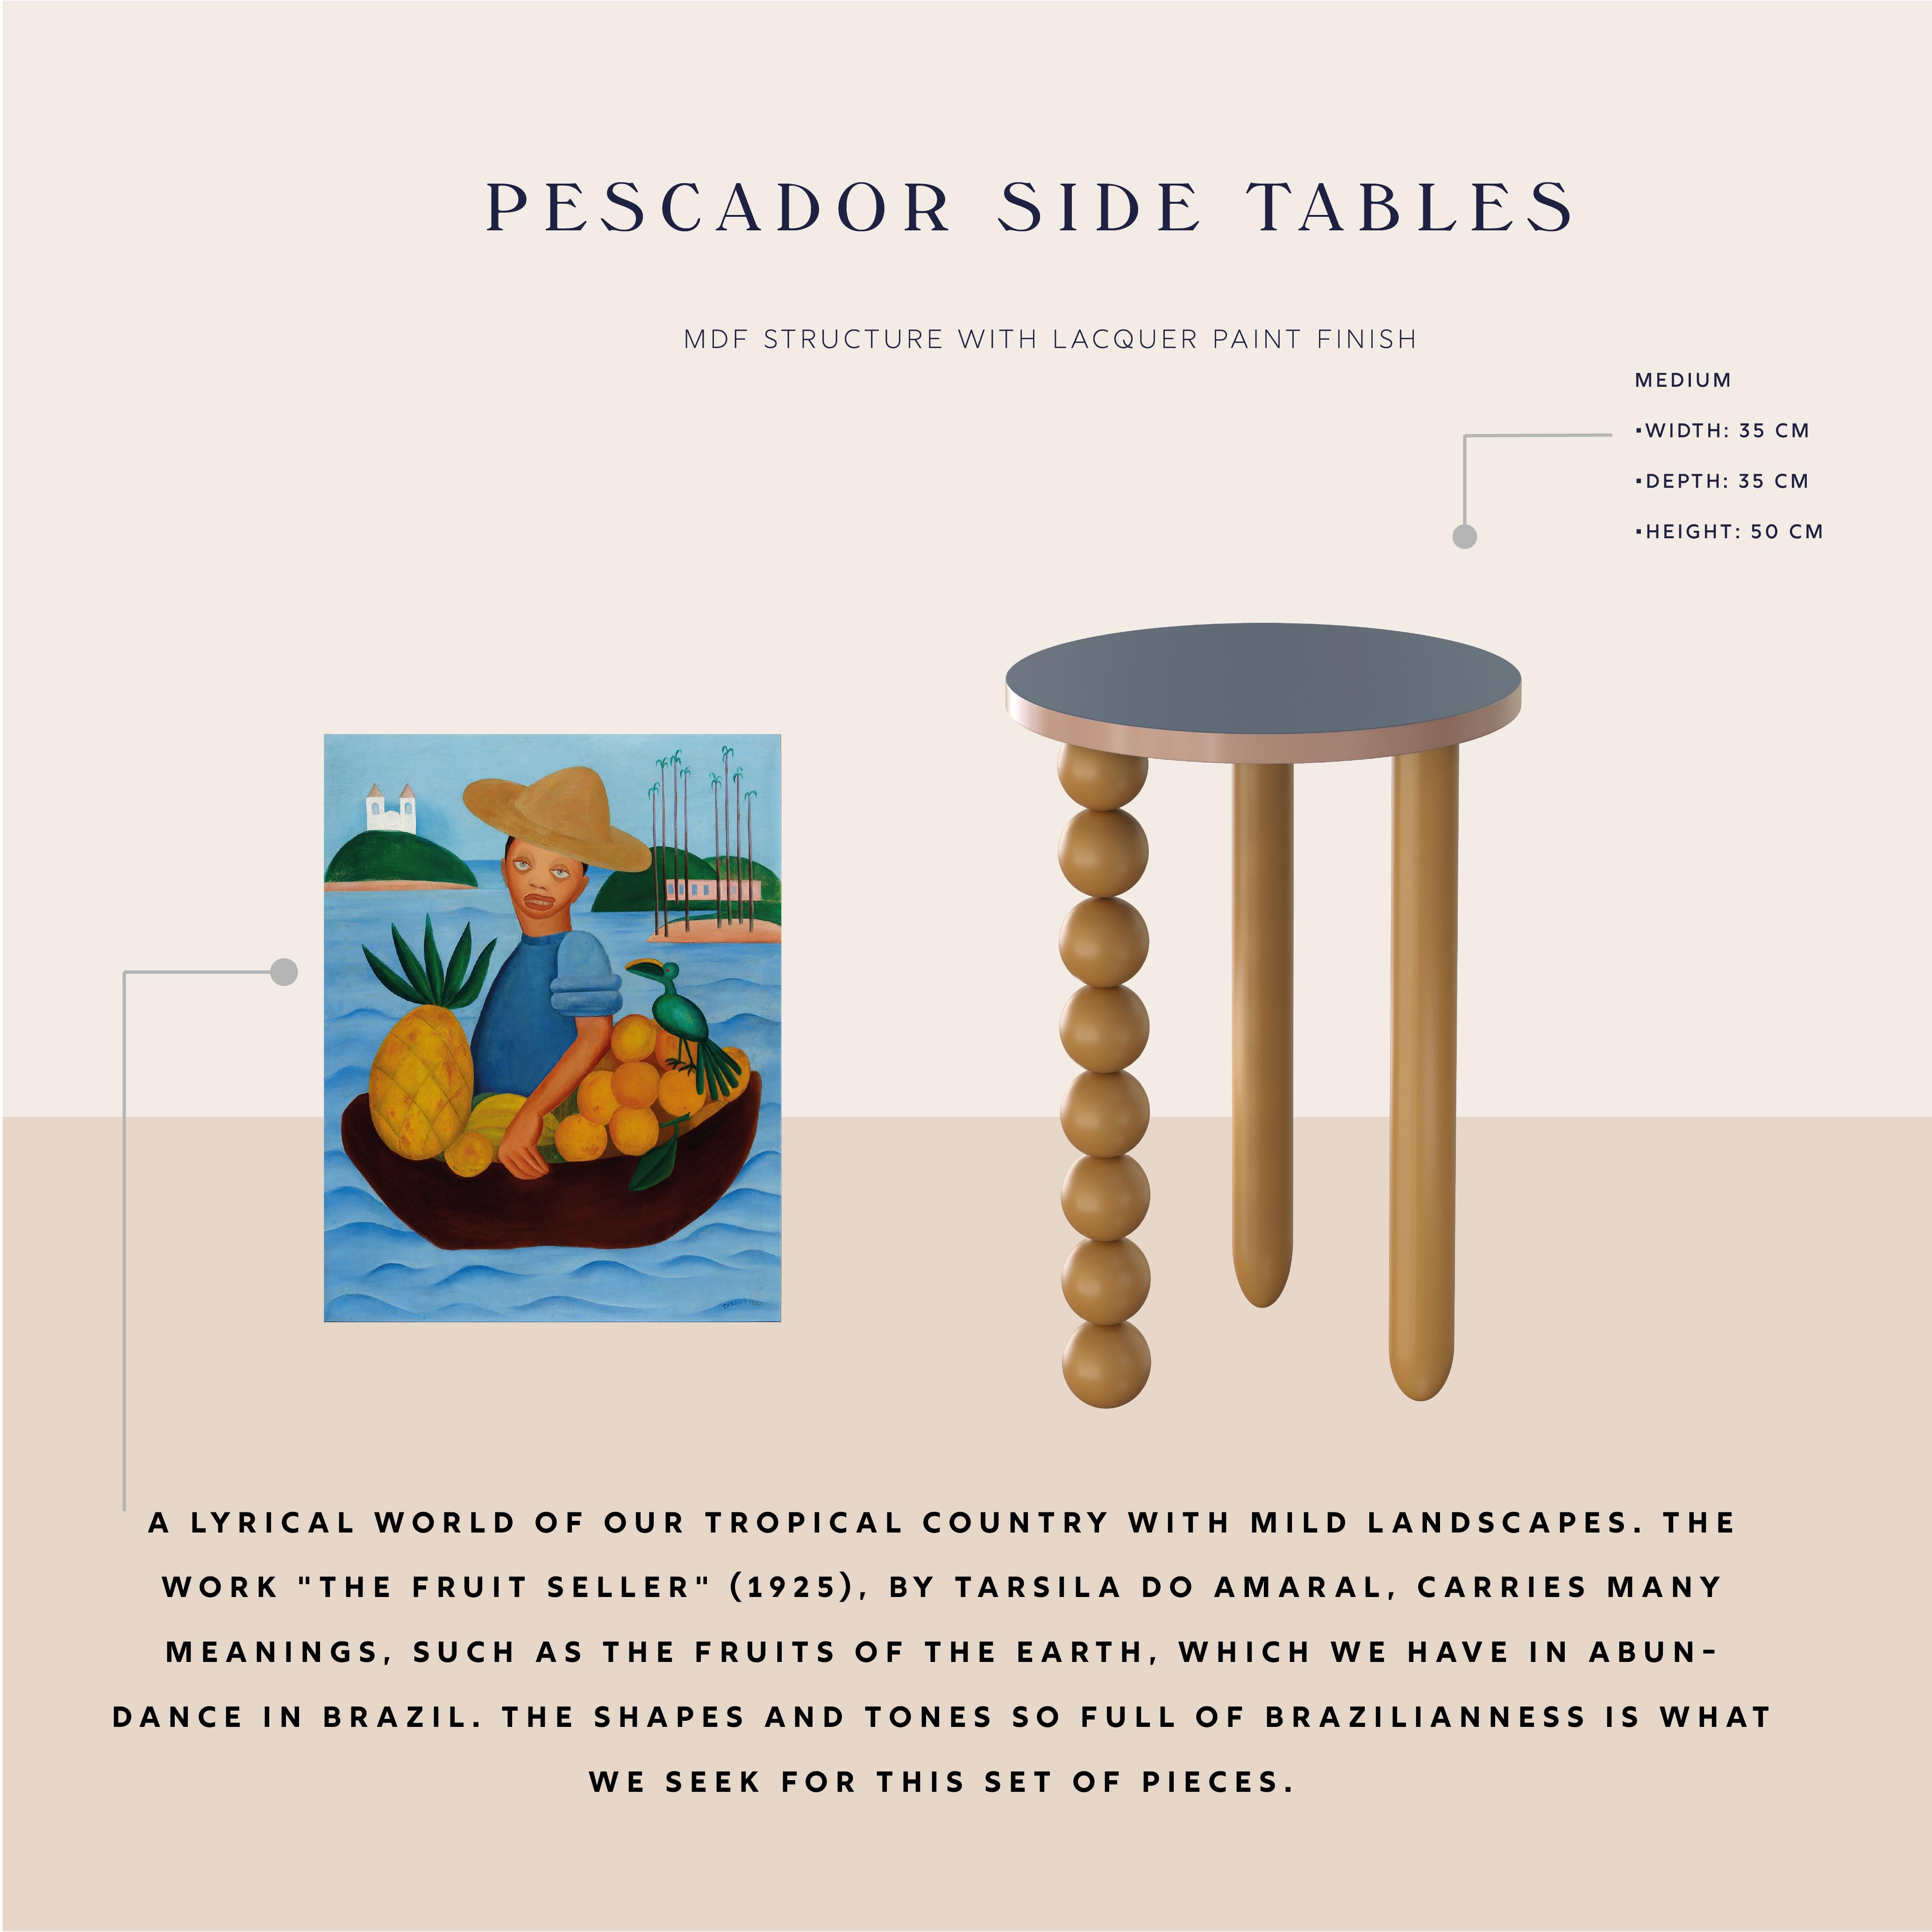 Contemporary Pescador Side Table Medium For Sale